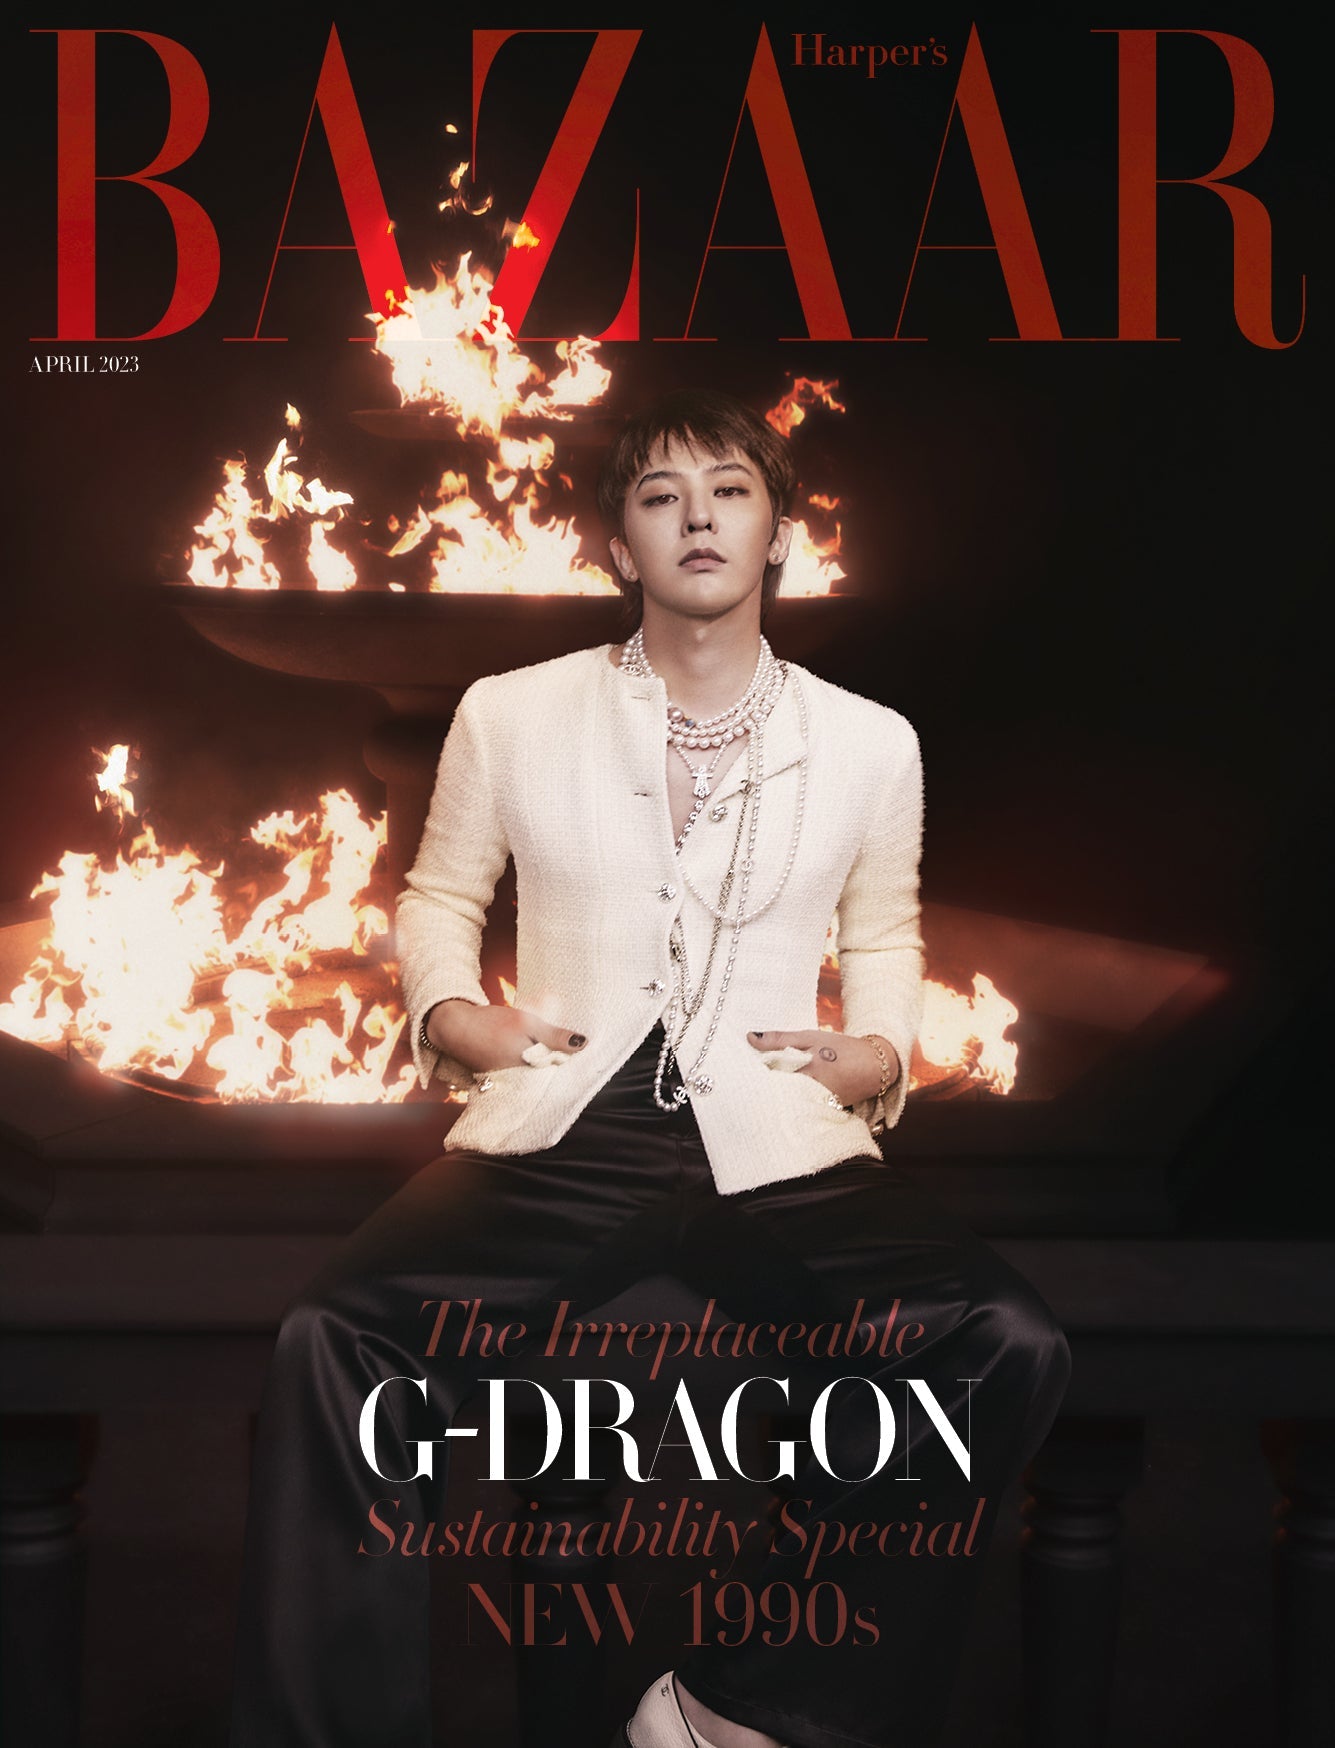 G-DRAGON on BAZAAR MAGAZINE Cover (April 2023 Issue) – Kpop Omo